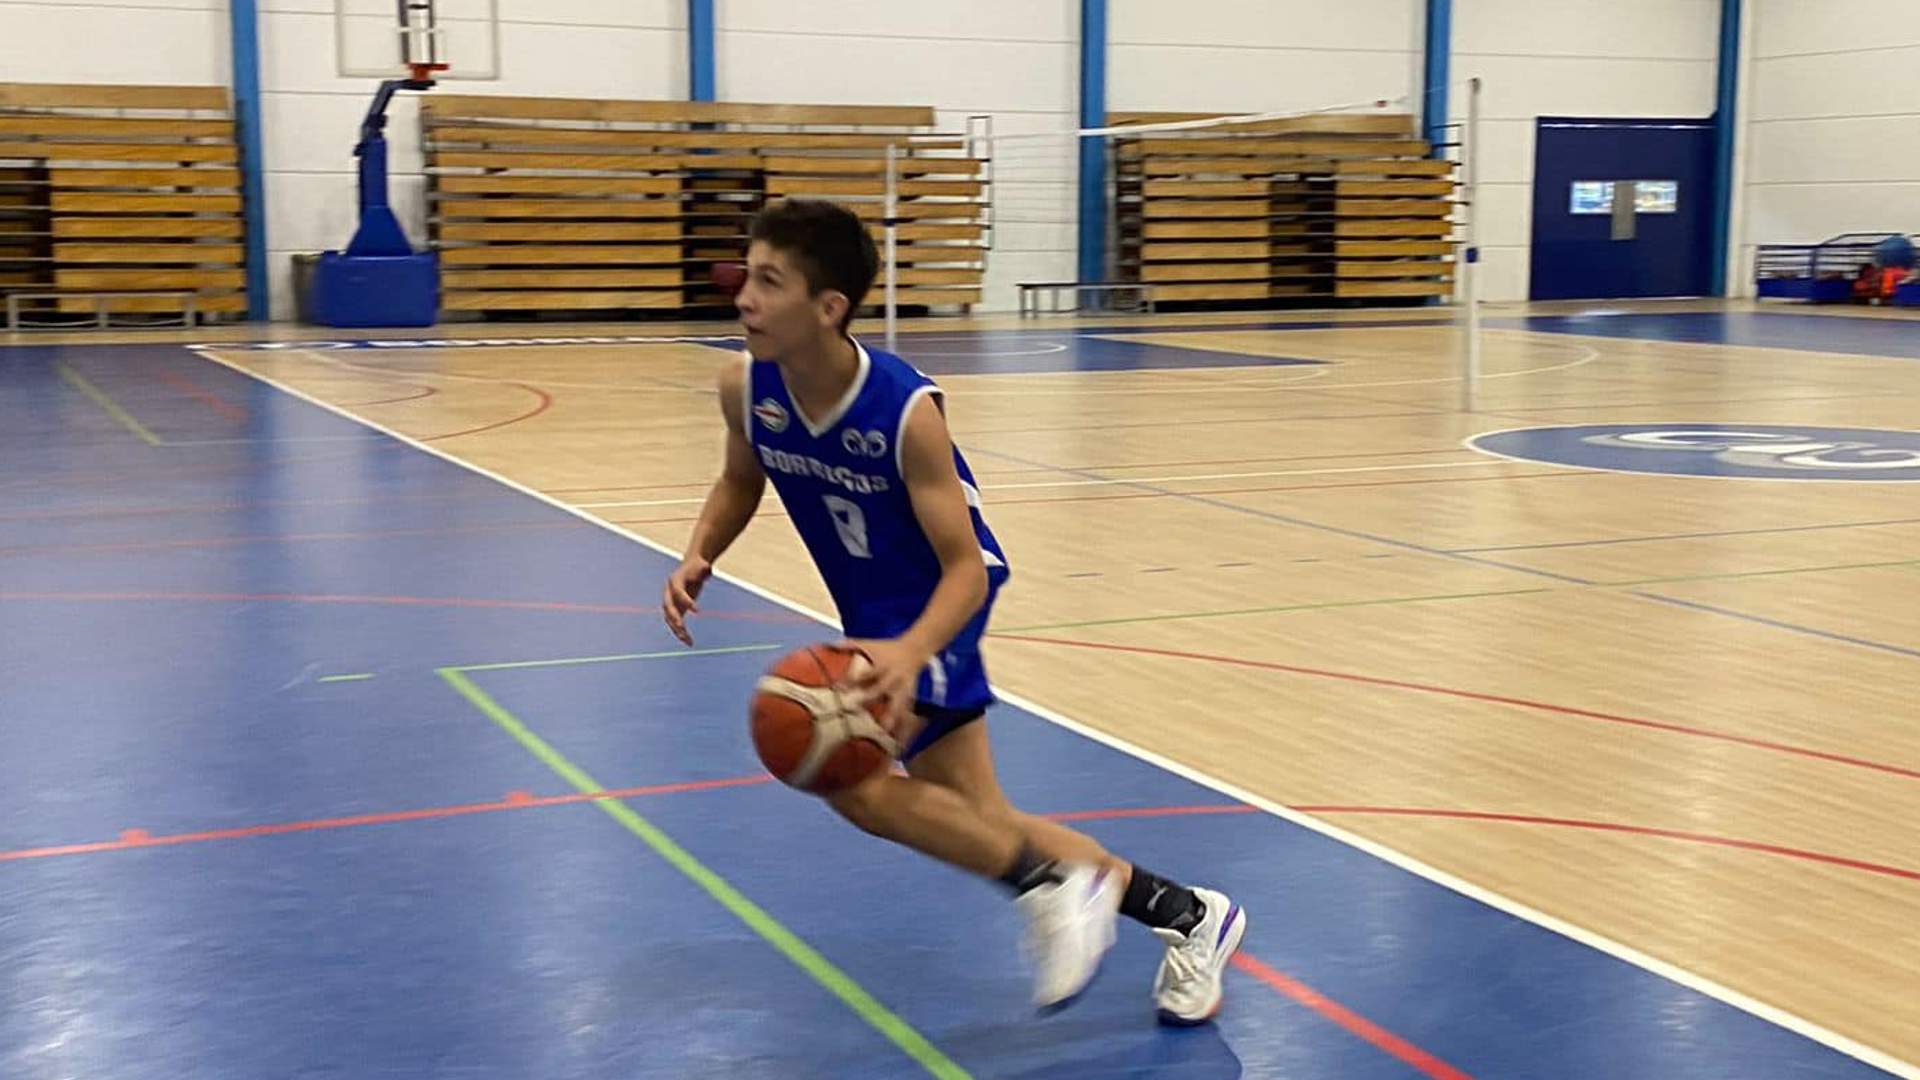 Joss Bravo jugando basquet